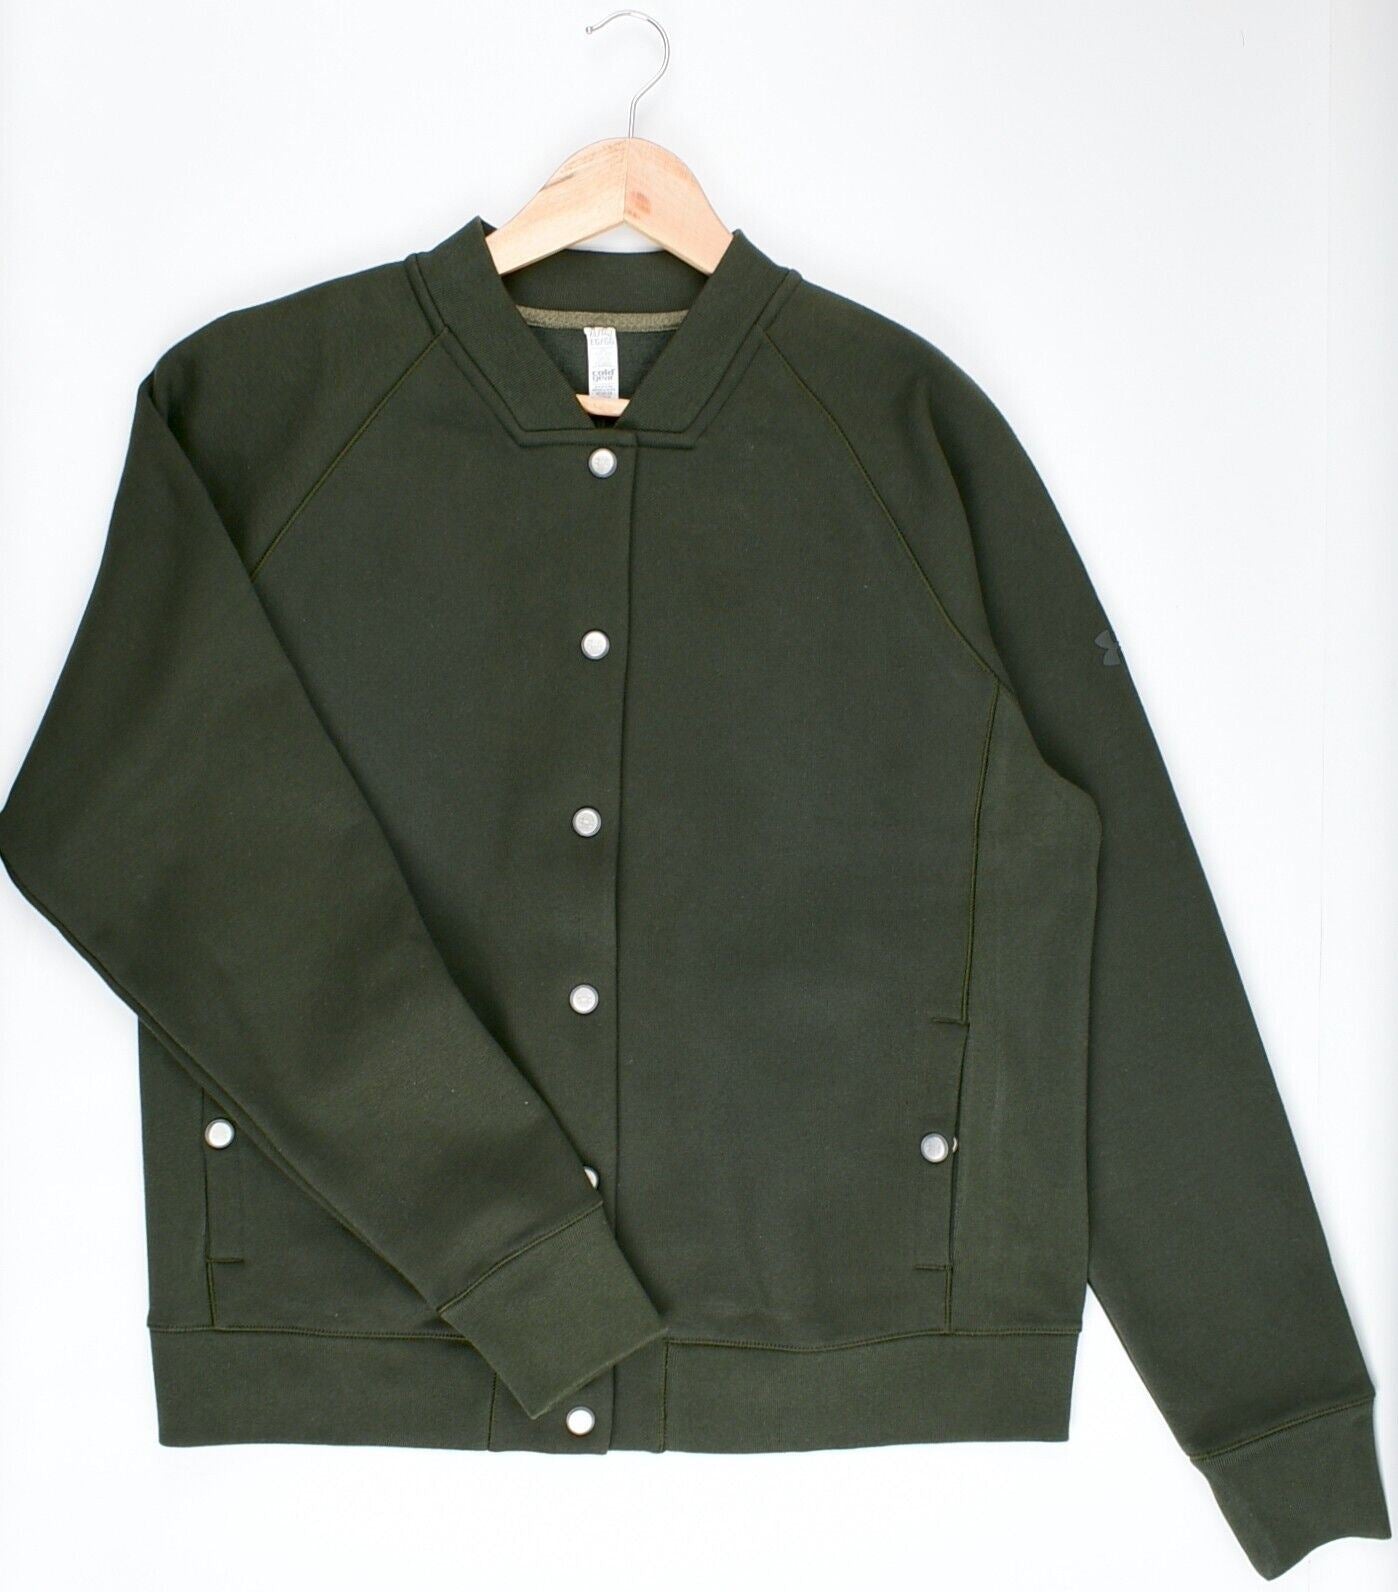 UNDER ARMOUR Women's Chaqueta Bomber Jacket, Green, size XL /UK 16